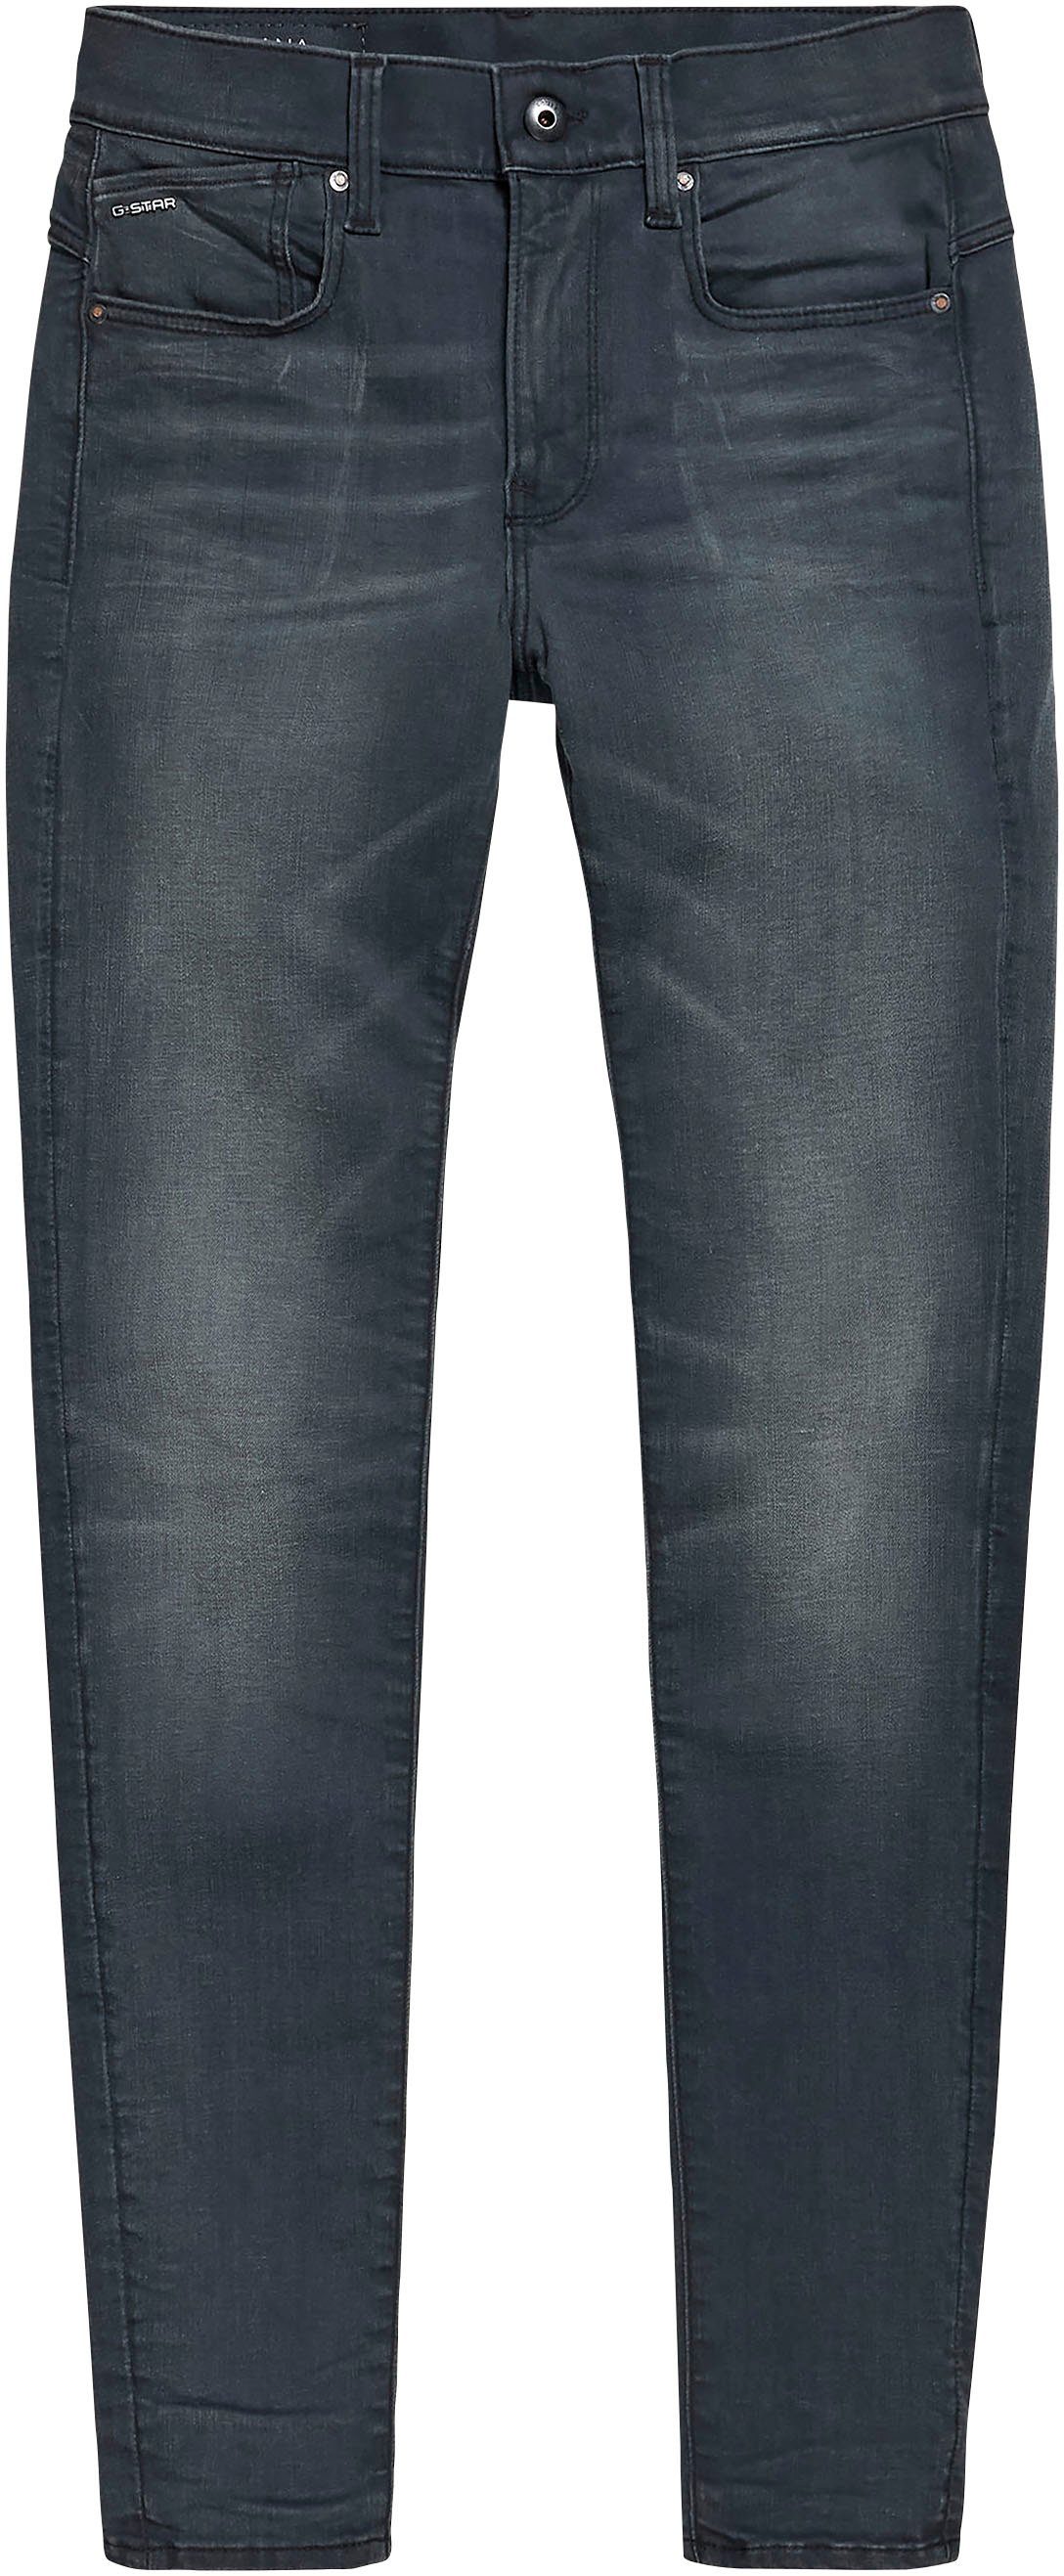 Lhana RAW G-Star Skinny Wmn Skinny-fit-Jeans